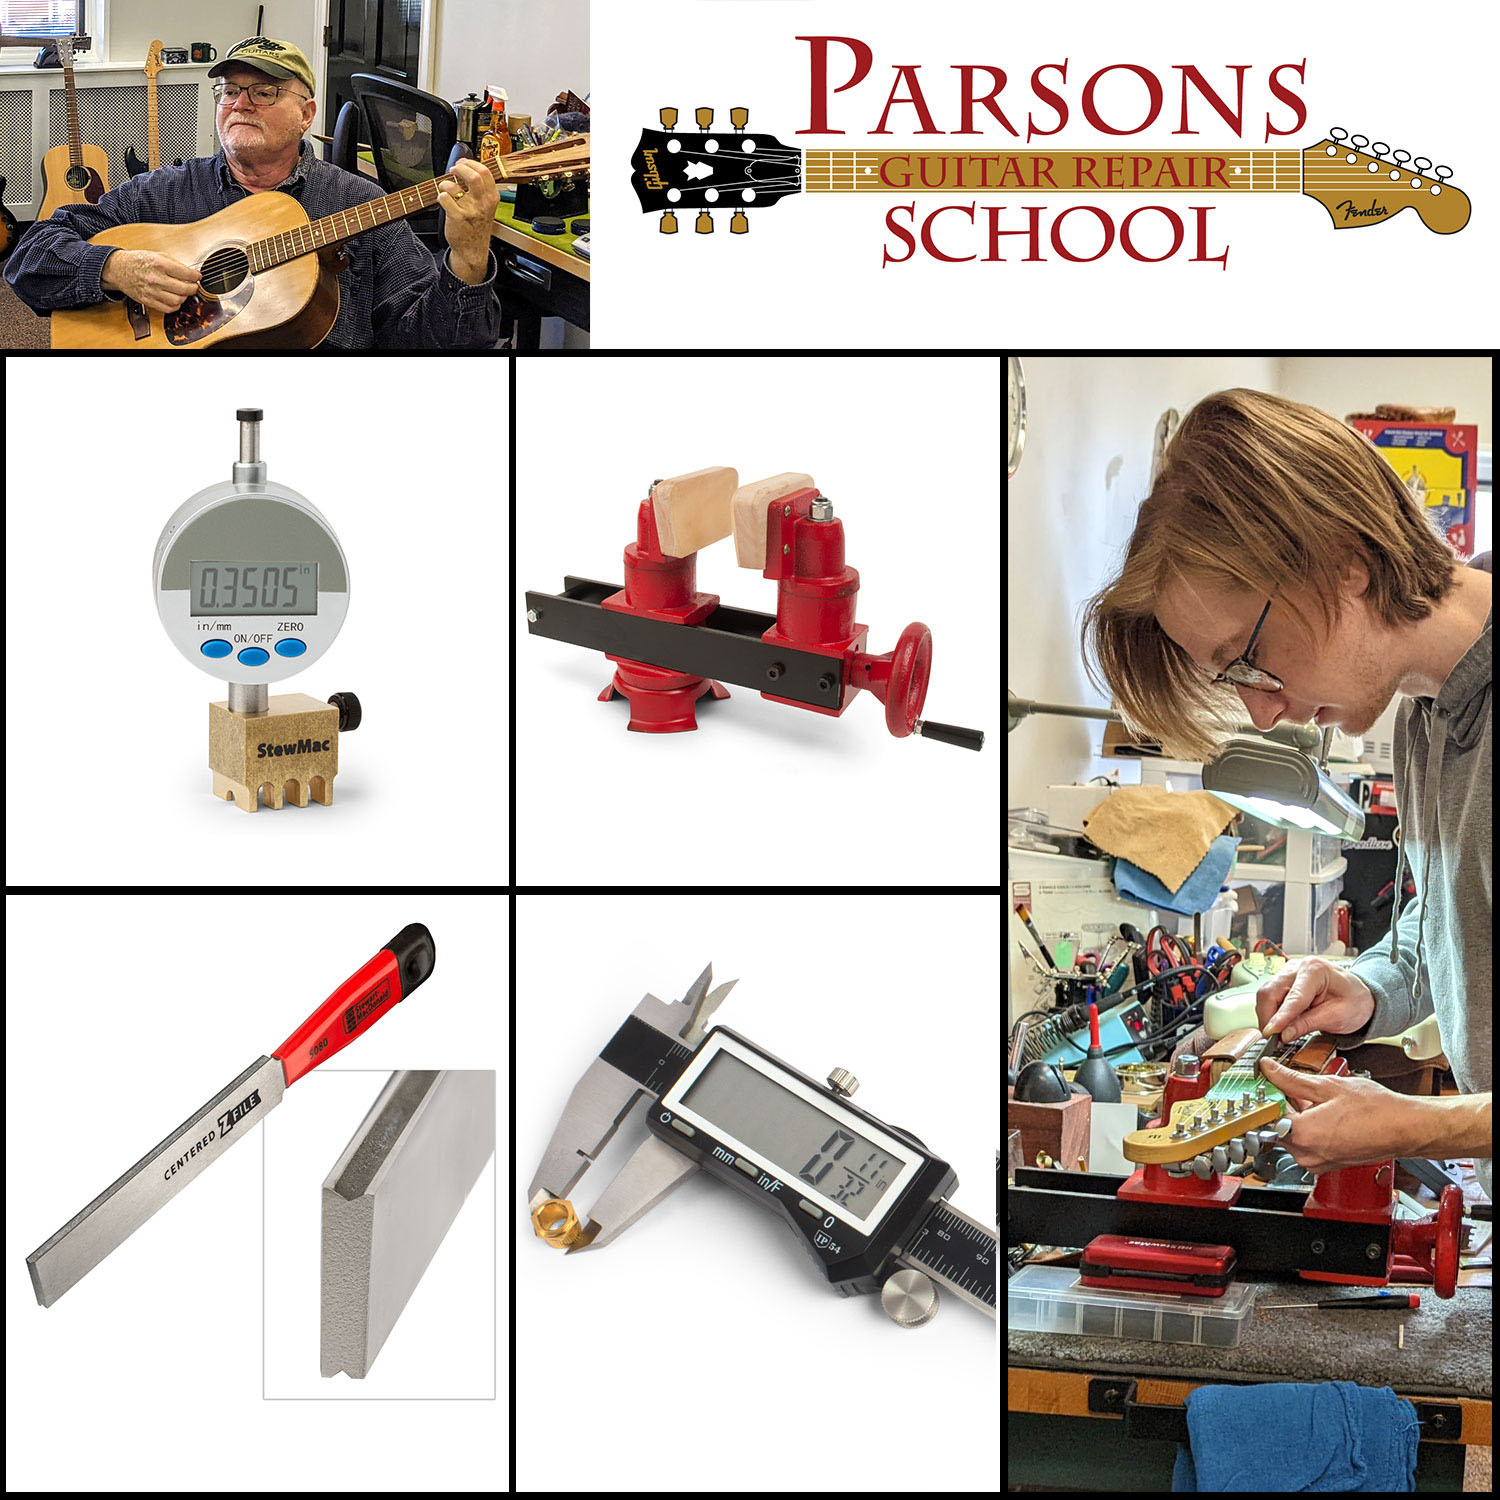 Tool List for the Parsons Guitar Repair School